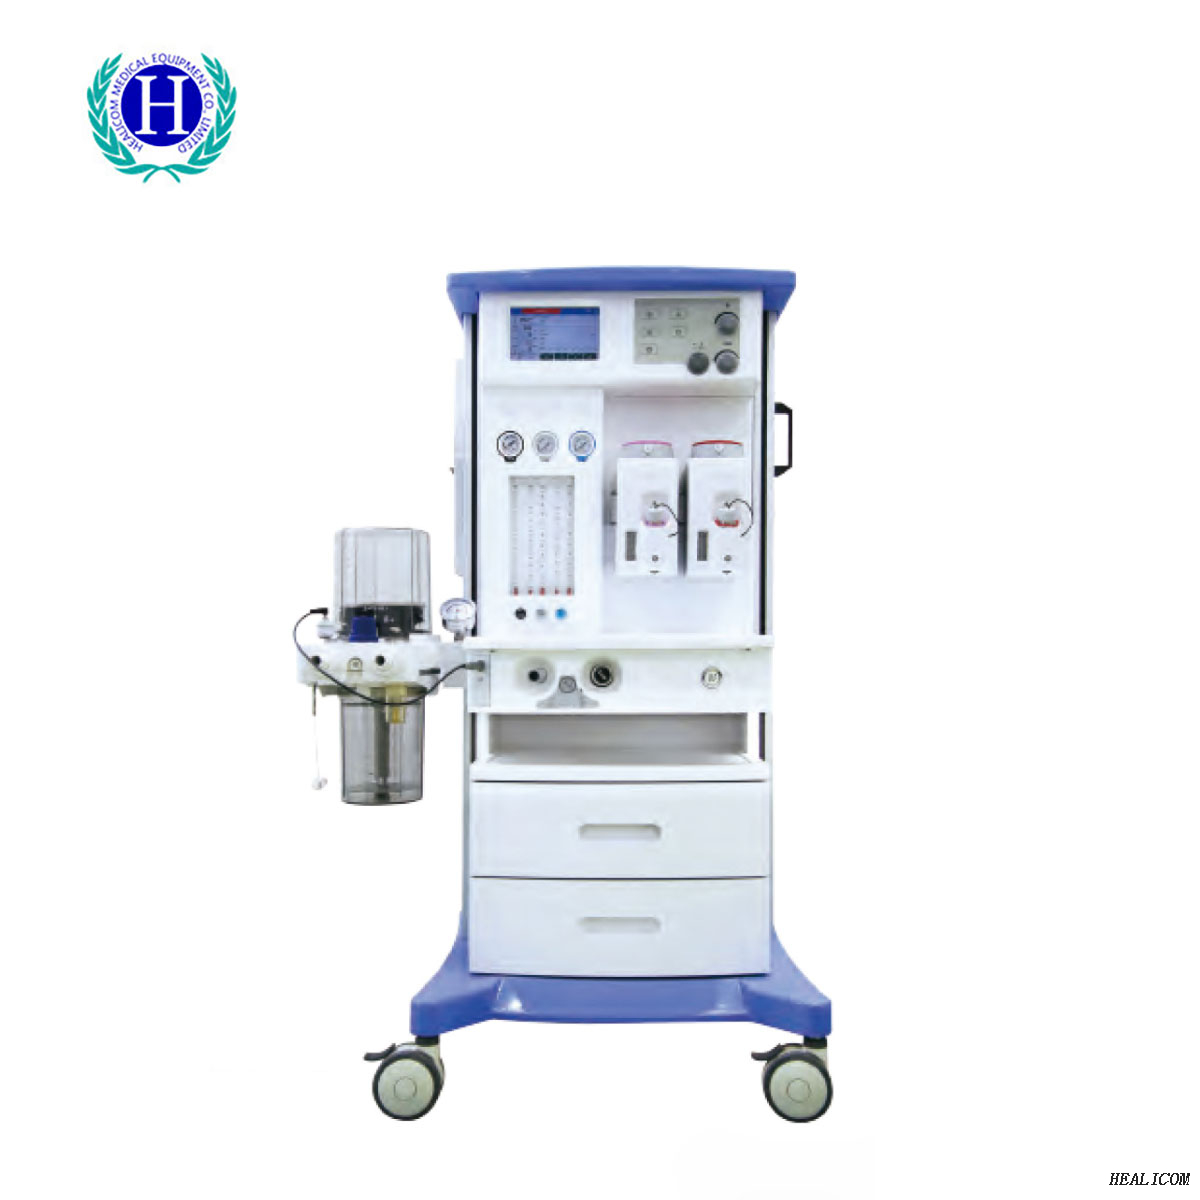 Healicom Hospital Medical HA-6100C Équipement d'anesthésie ICU Machine d'anesthésie portable